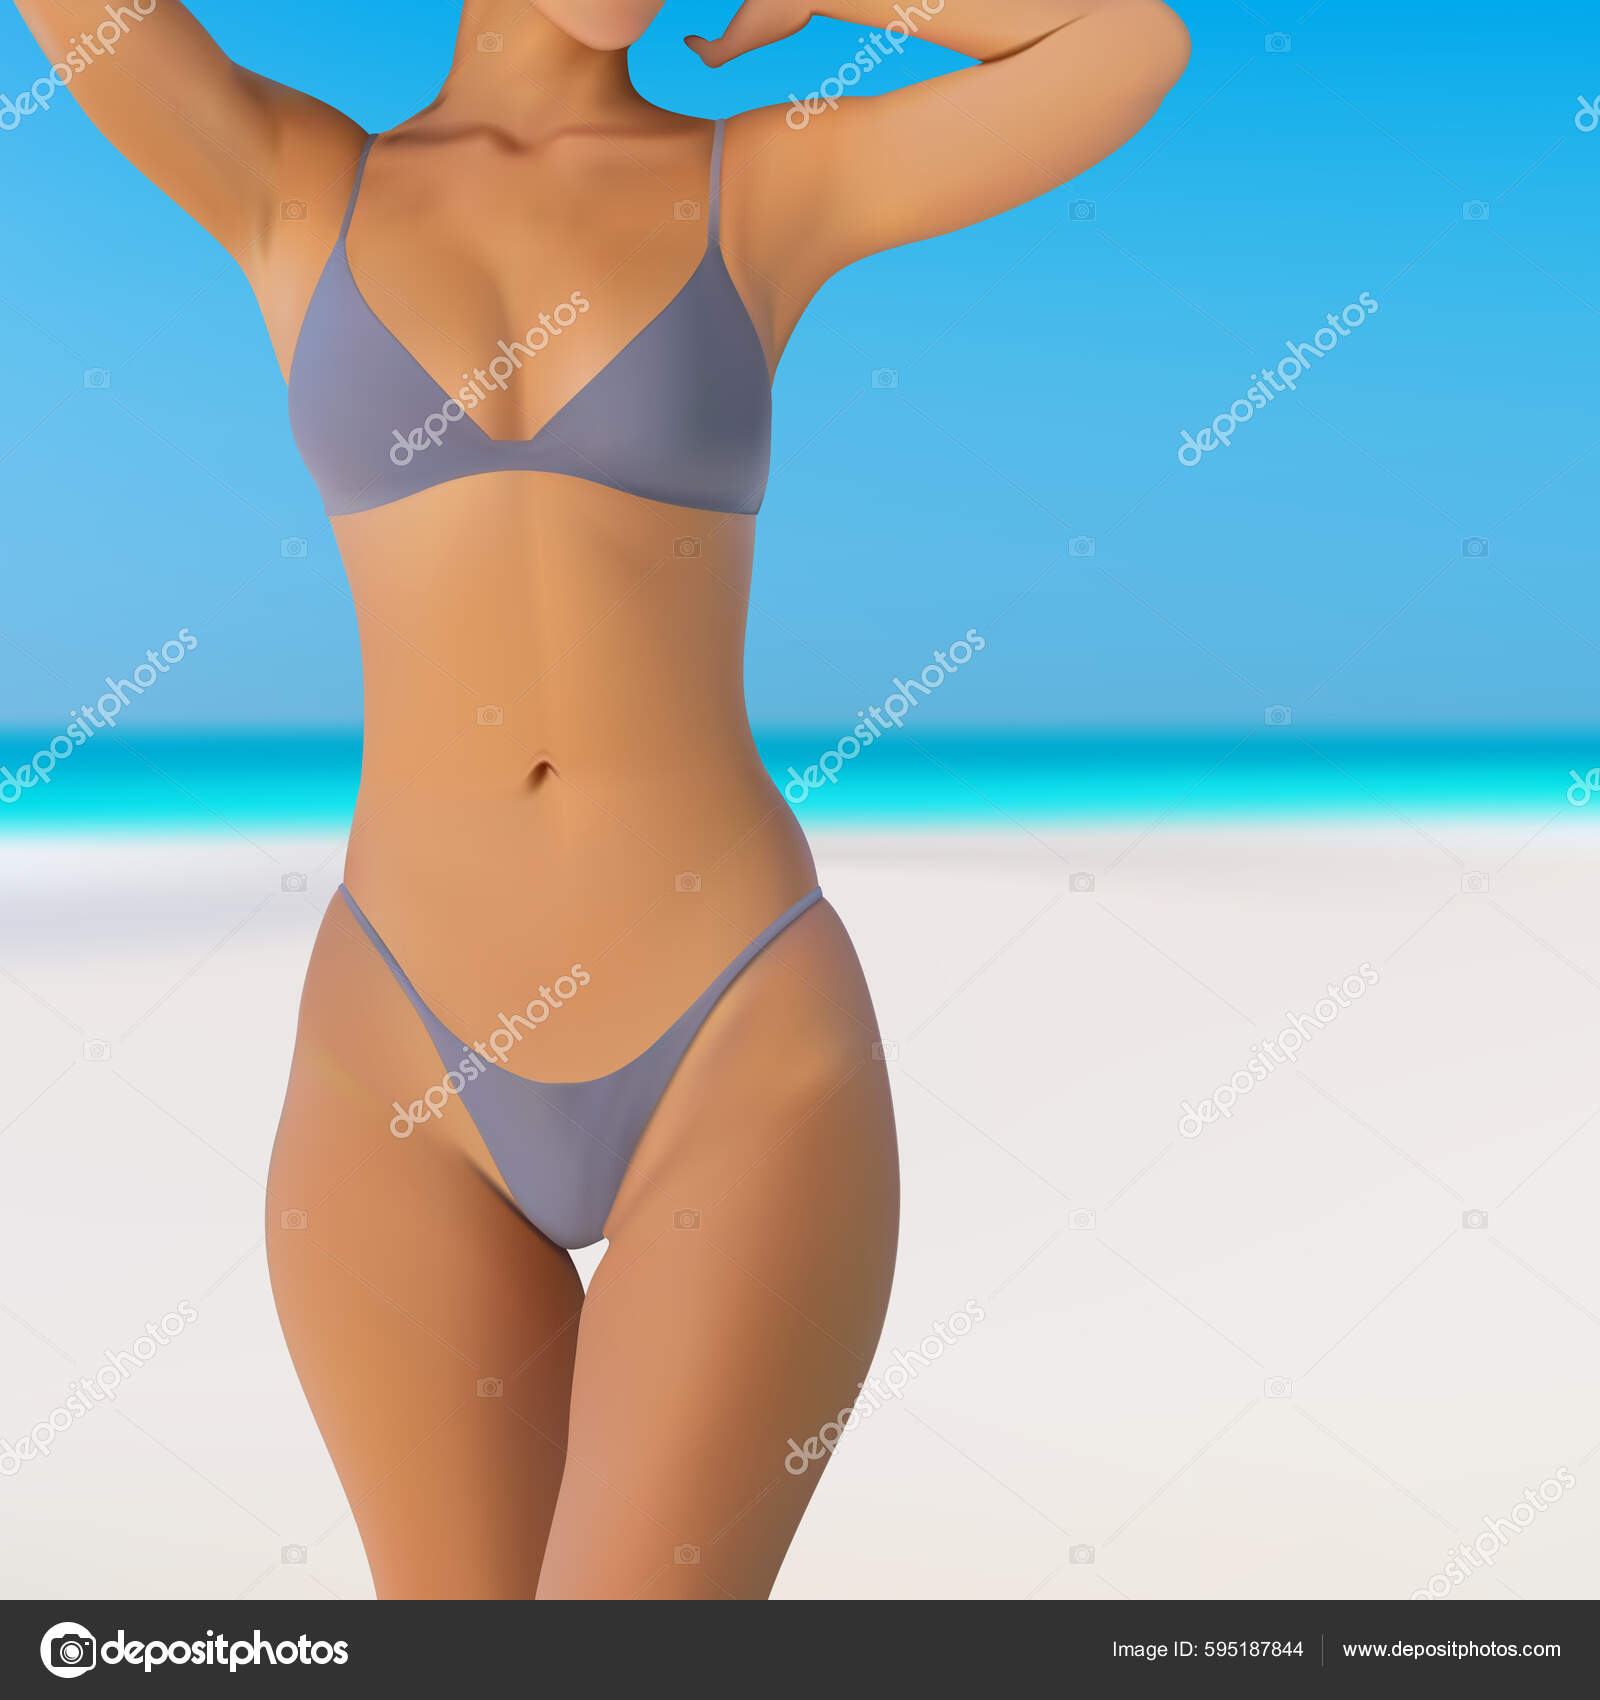 Swim Suit Bikini Revealing Images – Browse 13,599 Stock Photos, Vectors,  and Video